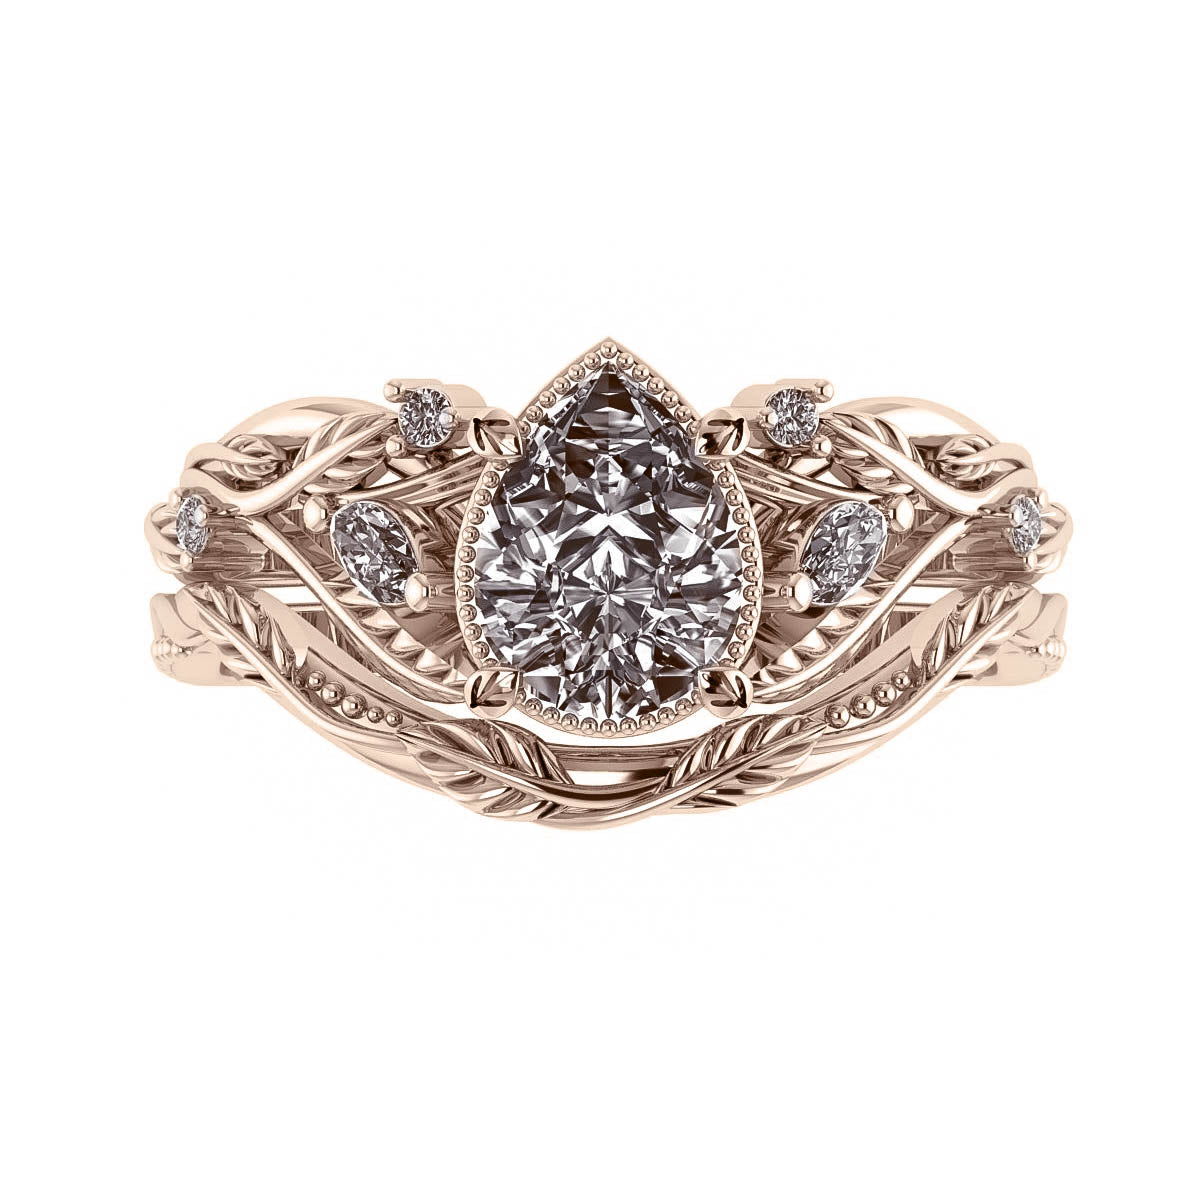 Patricia | custom bridal ring set with pear cut gemstone 8x6 mm - Eden Garden Jewelry™